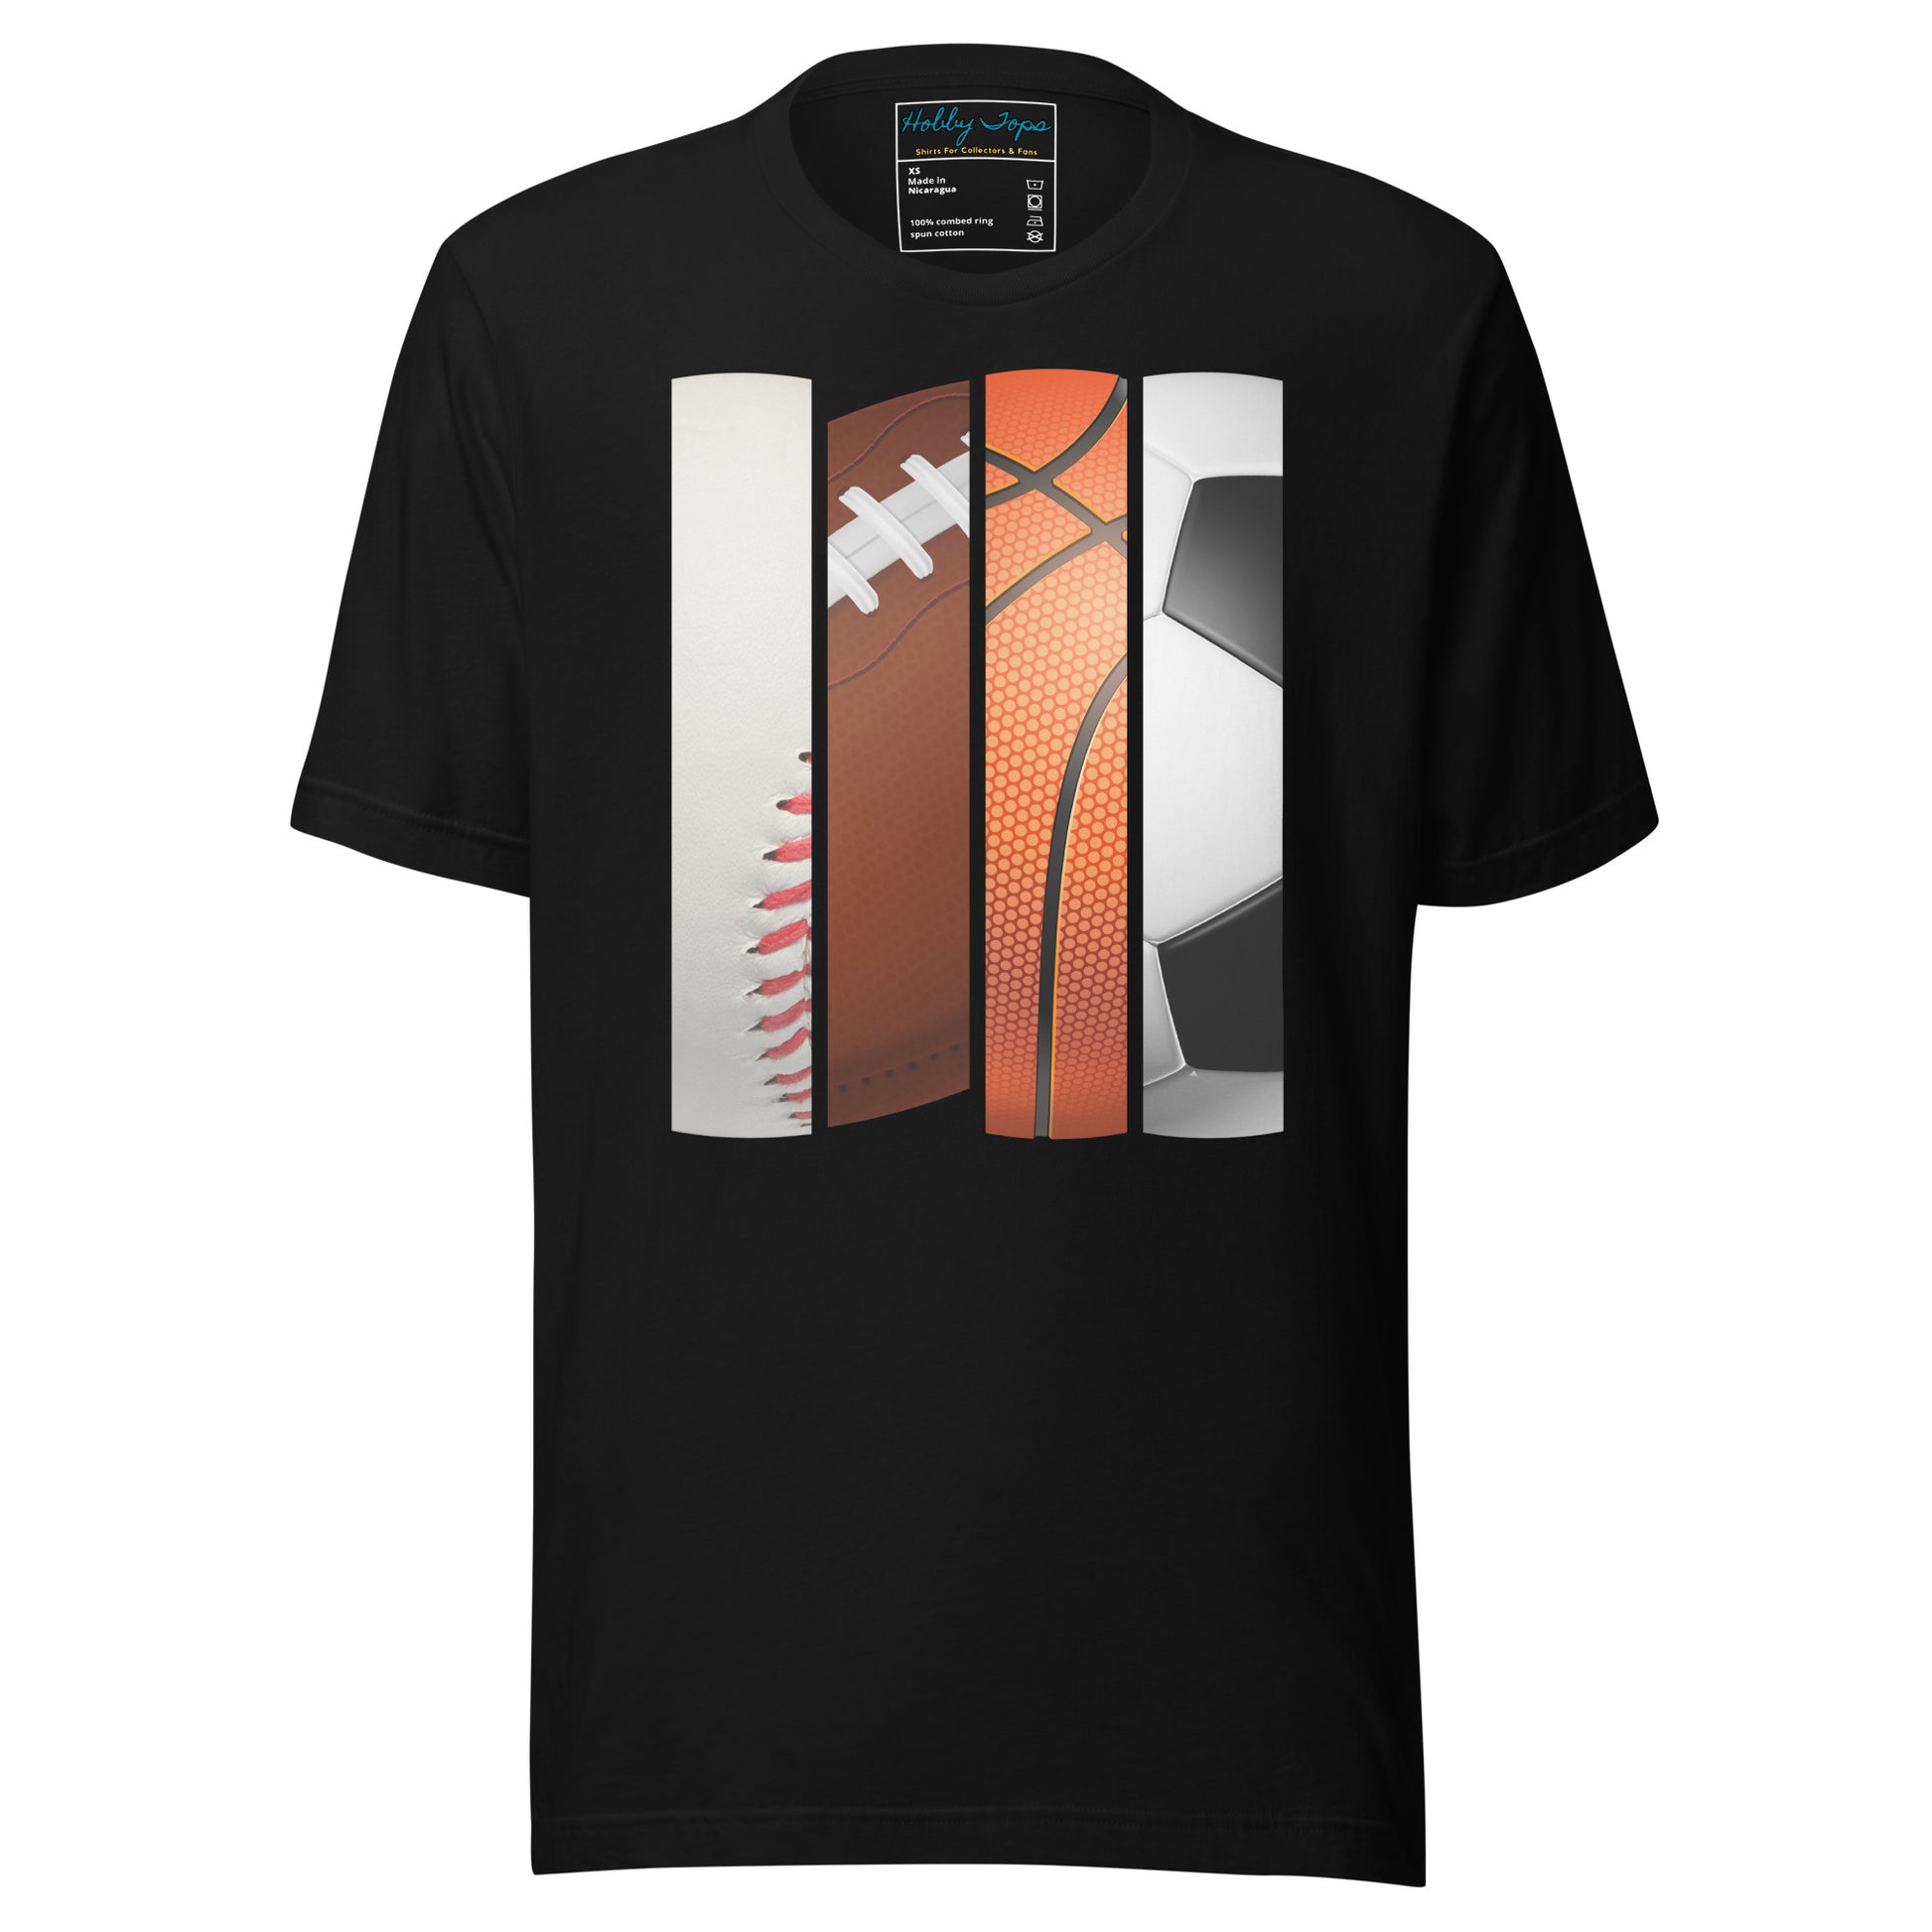 Four Sports Tops t-shirt Hobby – Unisex